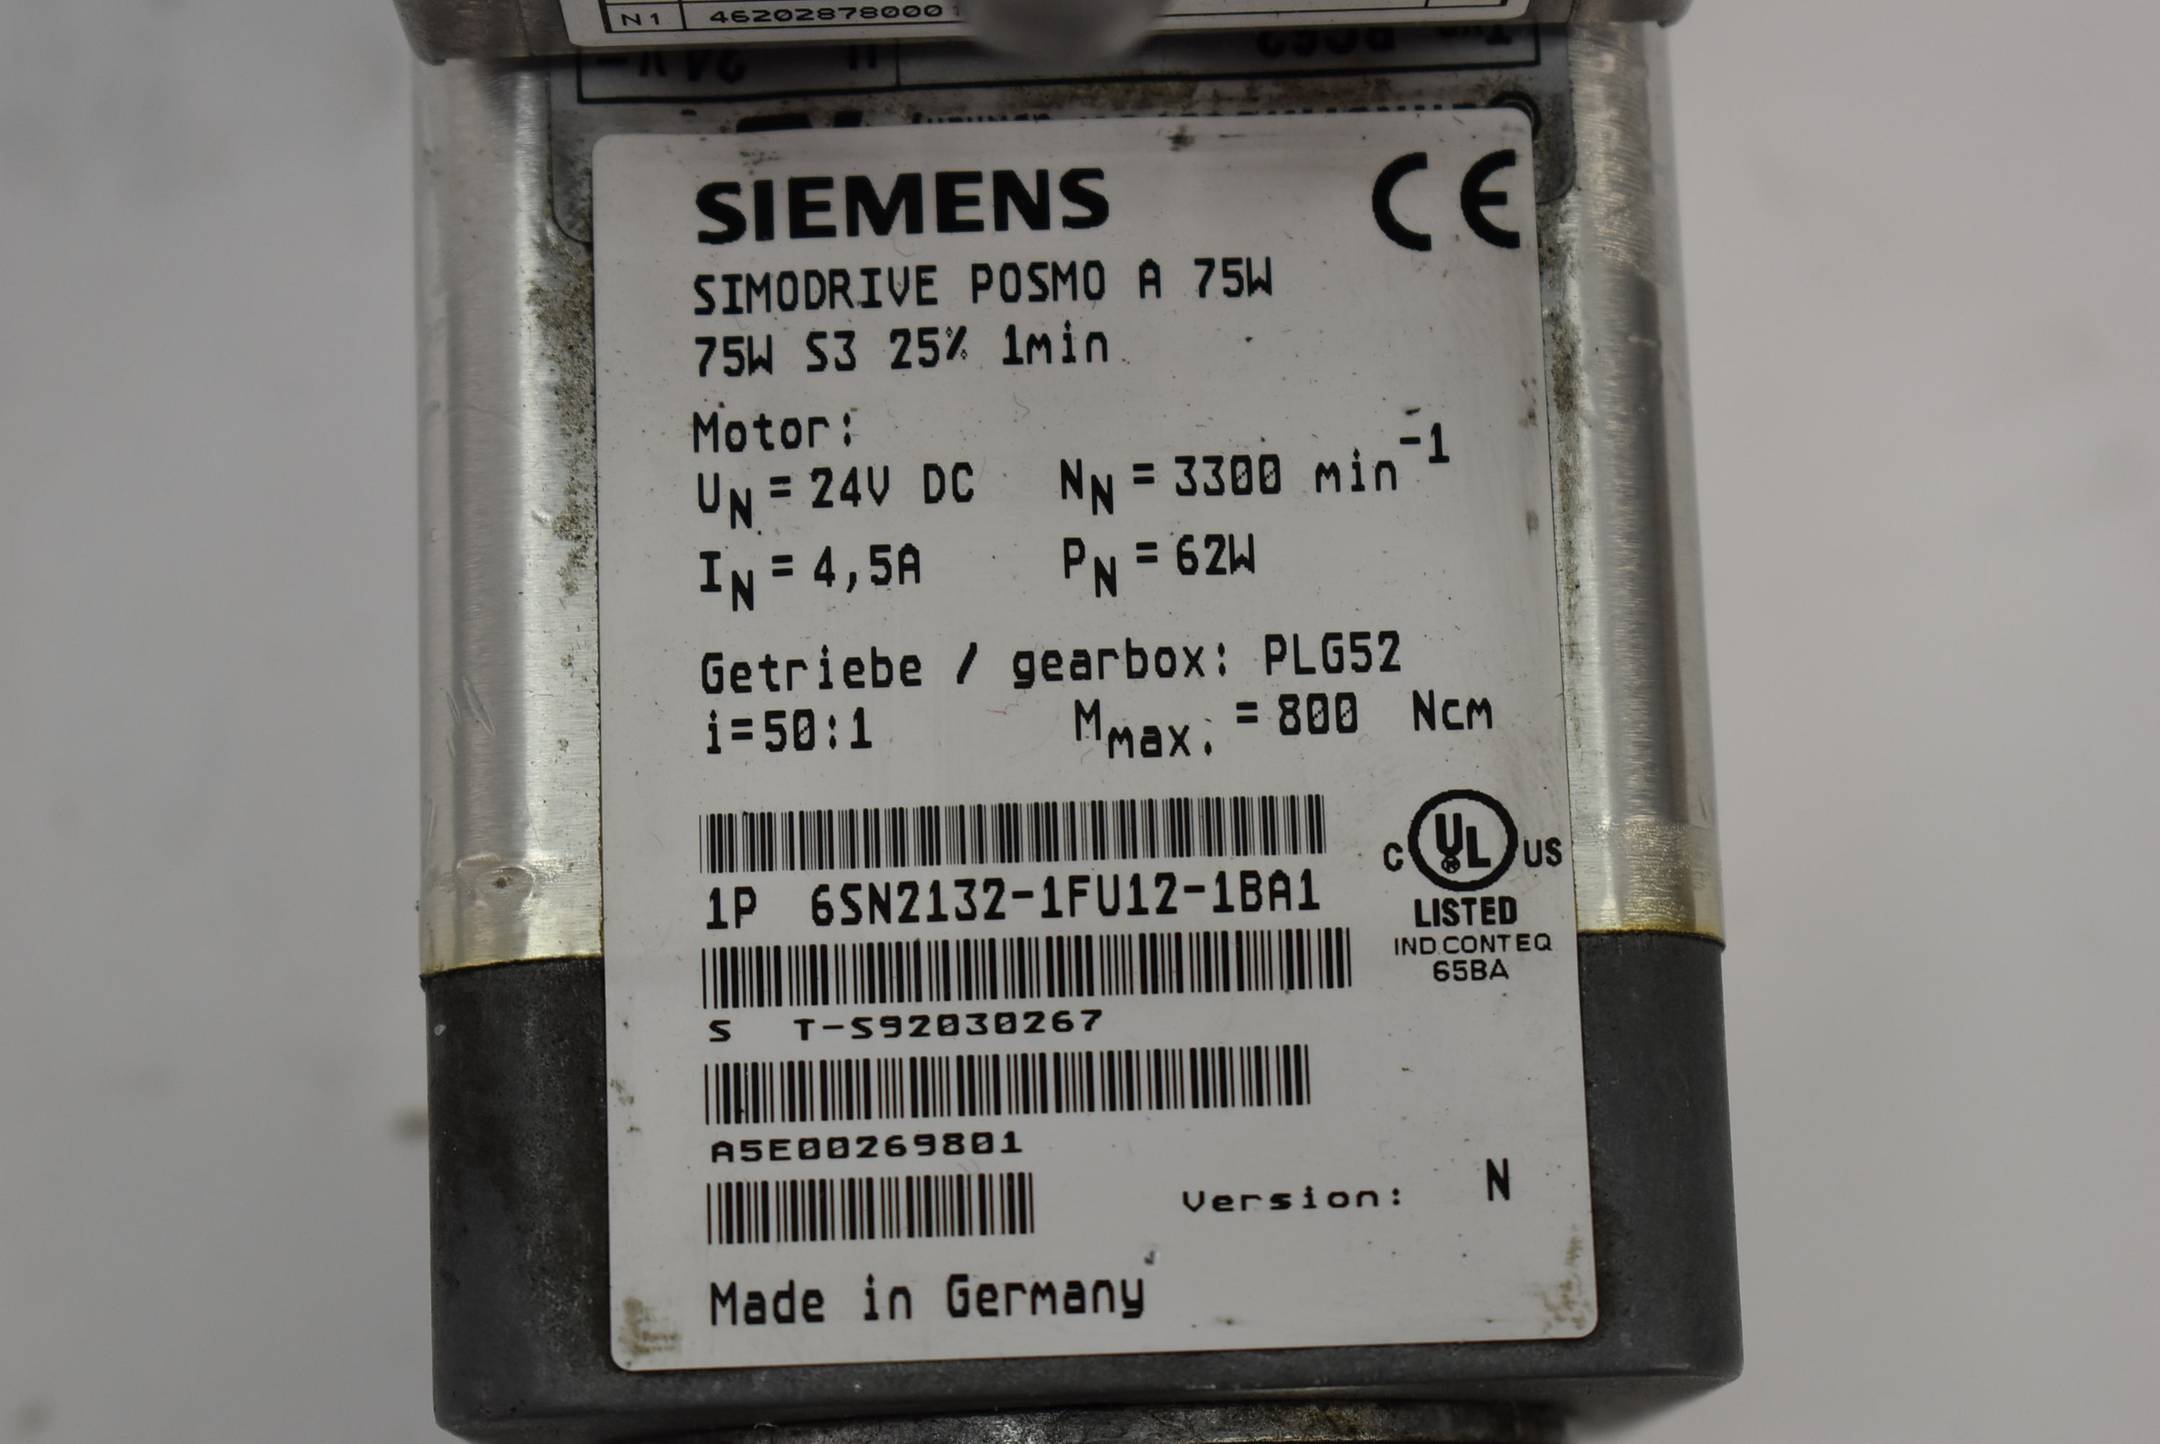 Siemens simodrive POSMO A 6SN2132-1FU12-1BA1 ( 6SN2 132-1FU12-1BA1 ) Version N